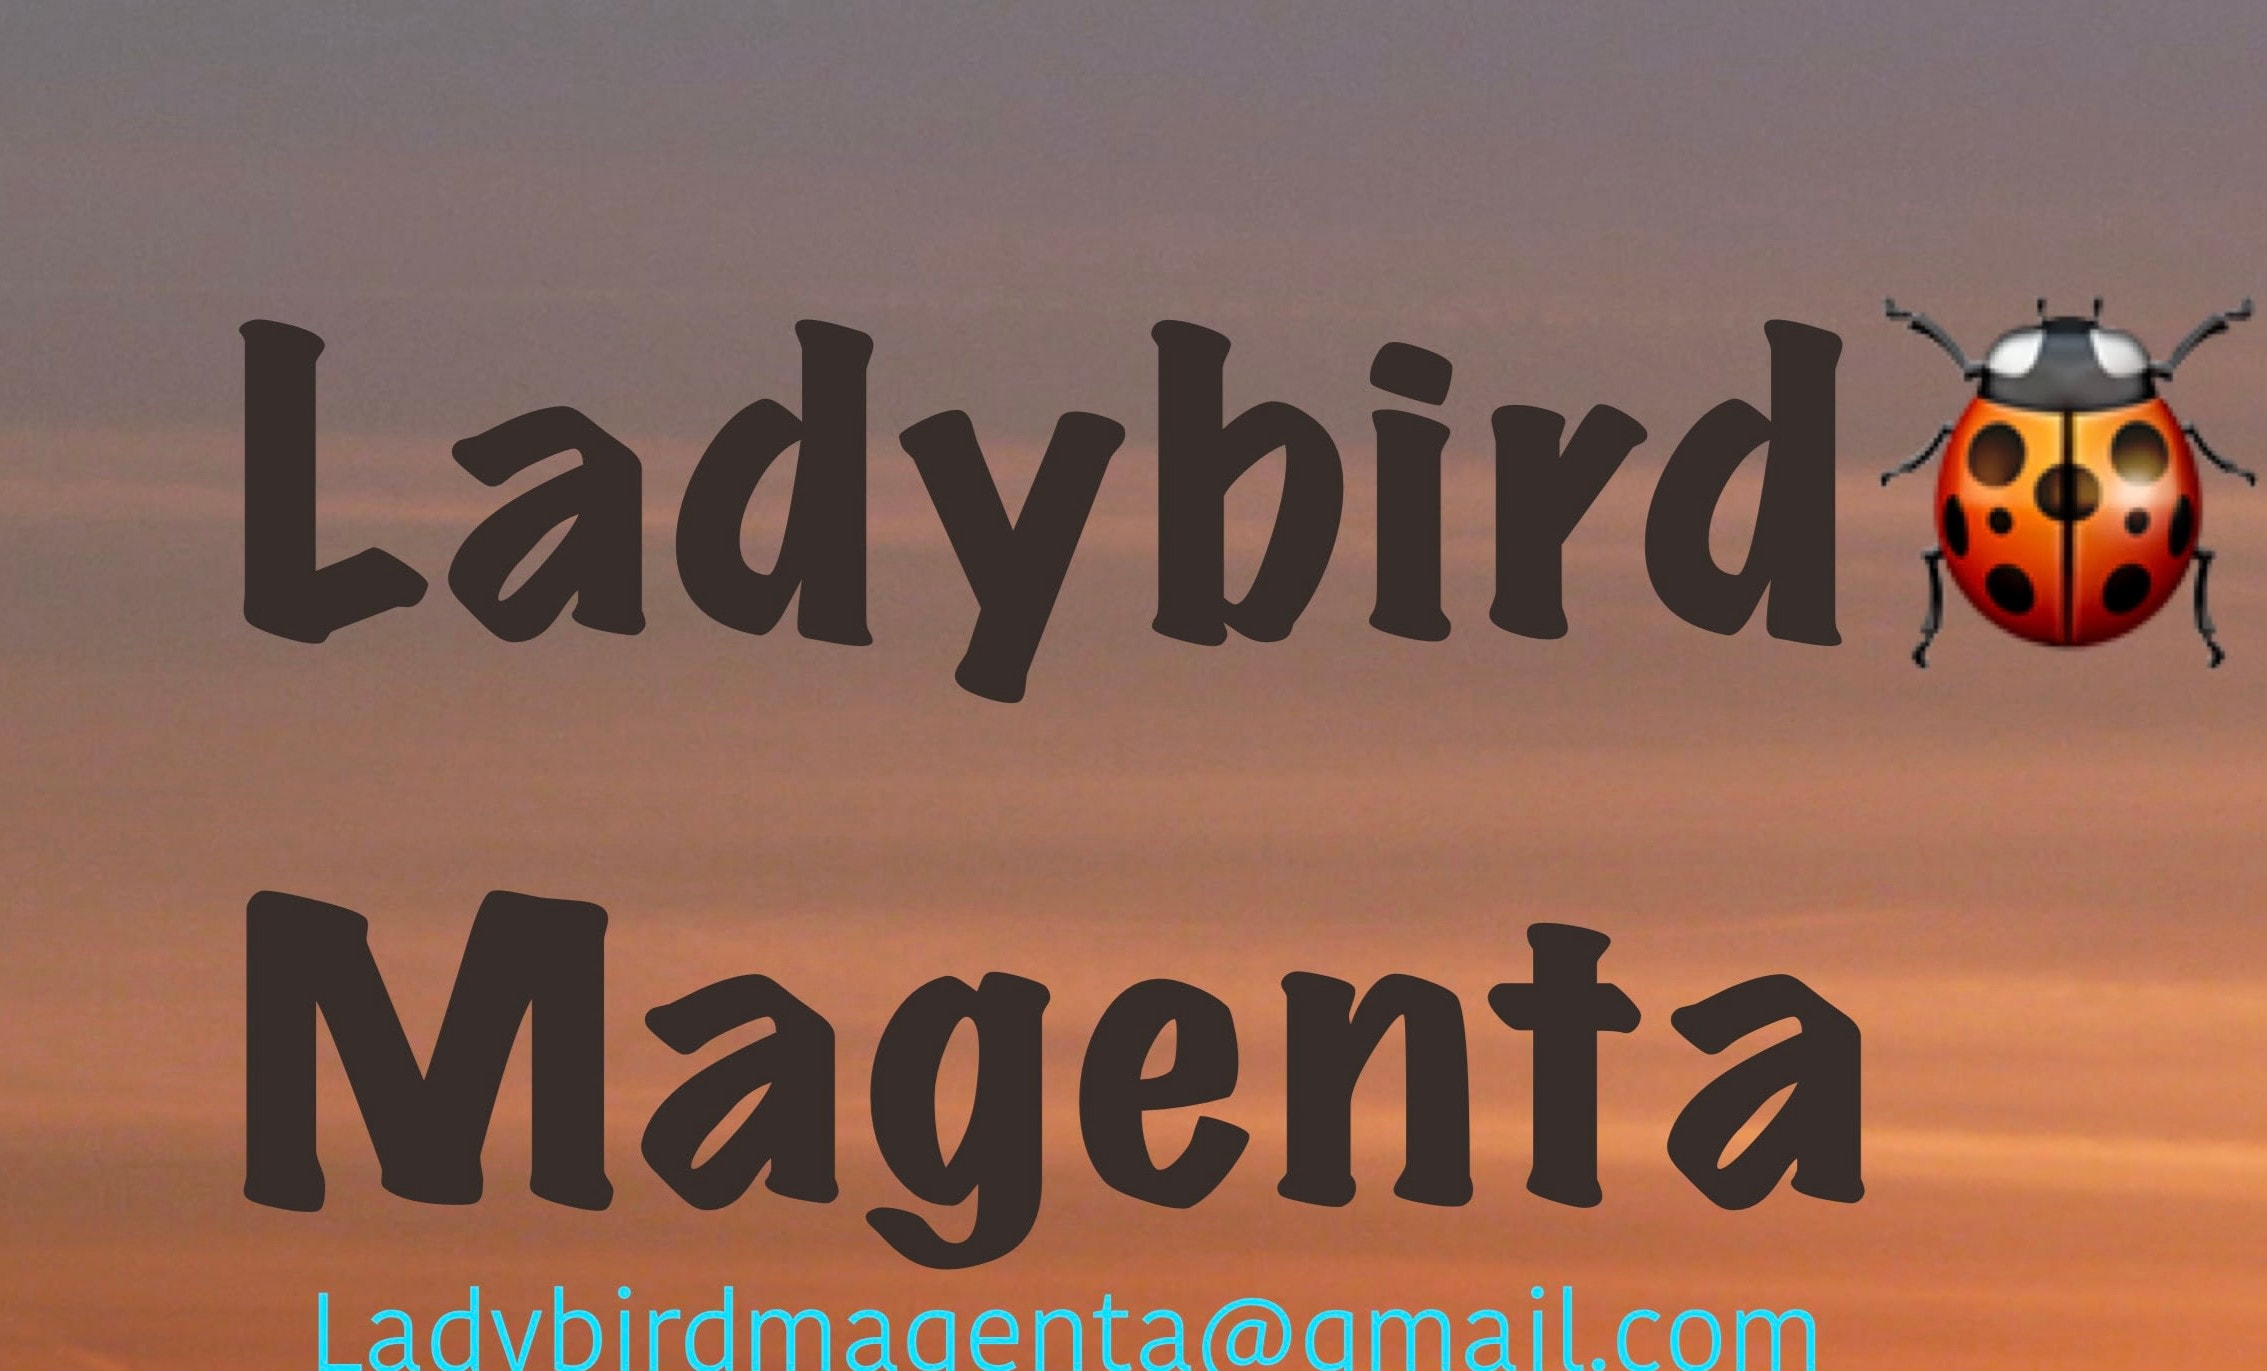 Ladybird Magenta